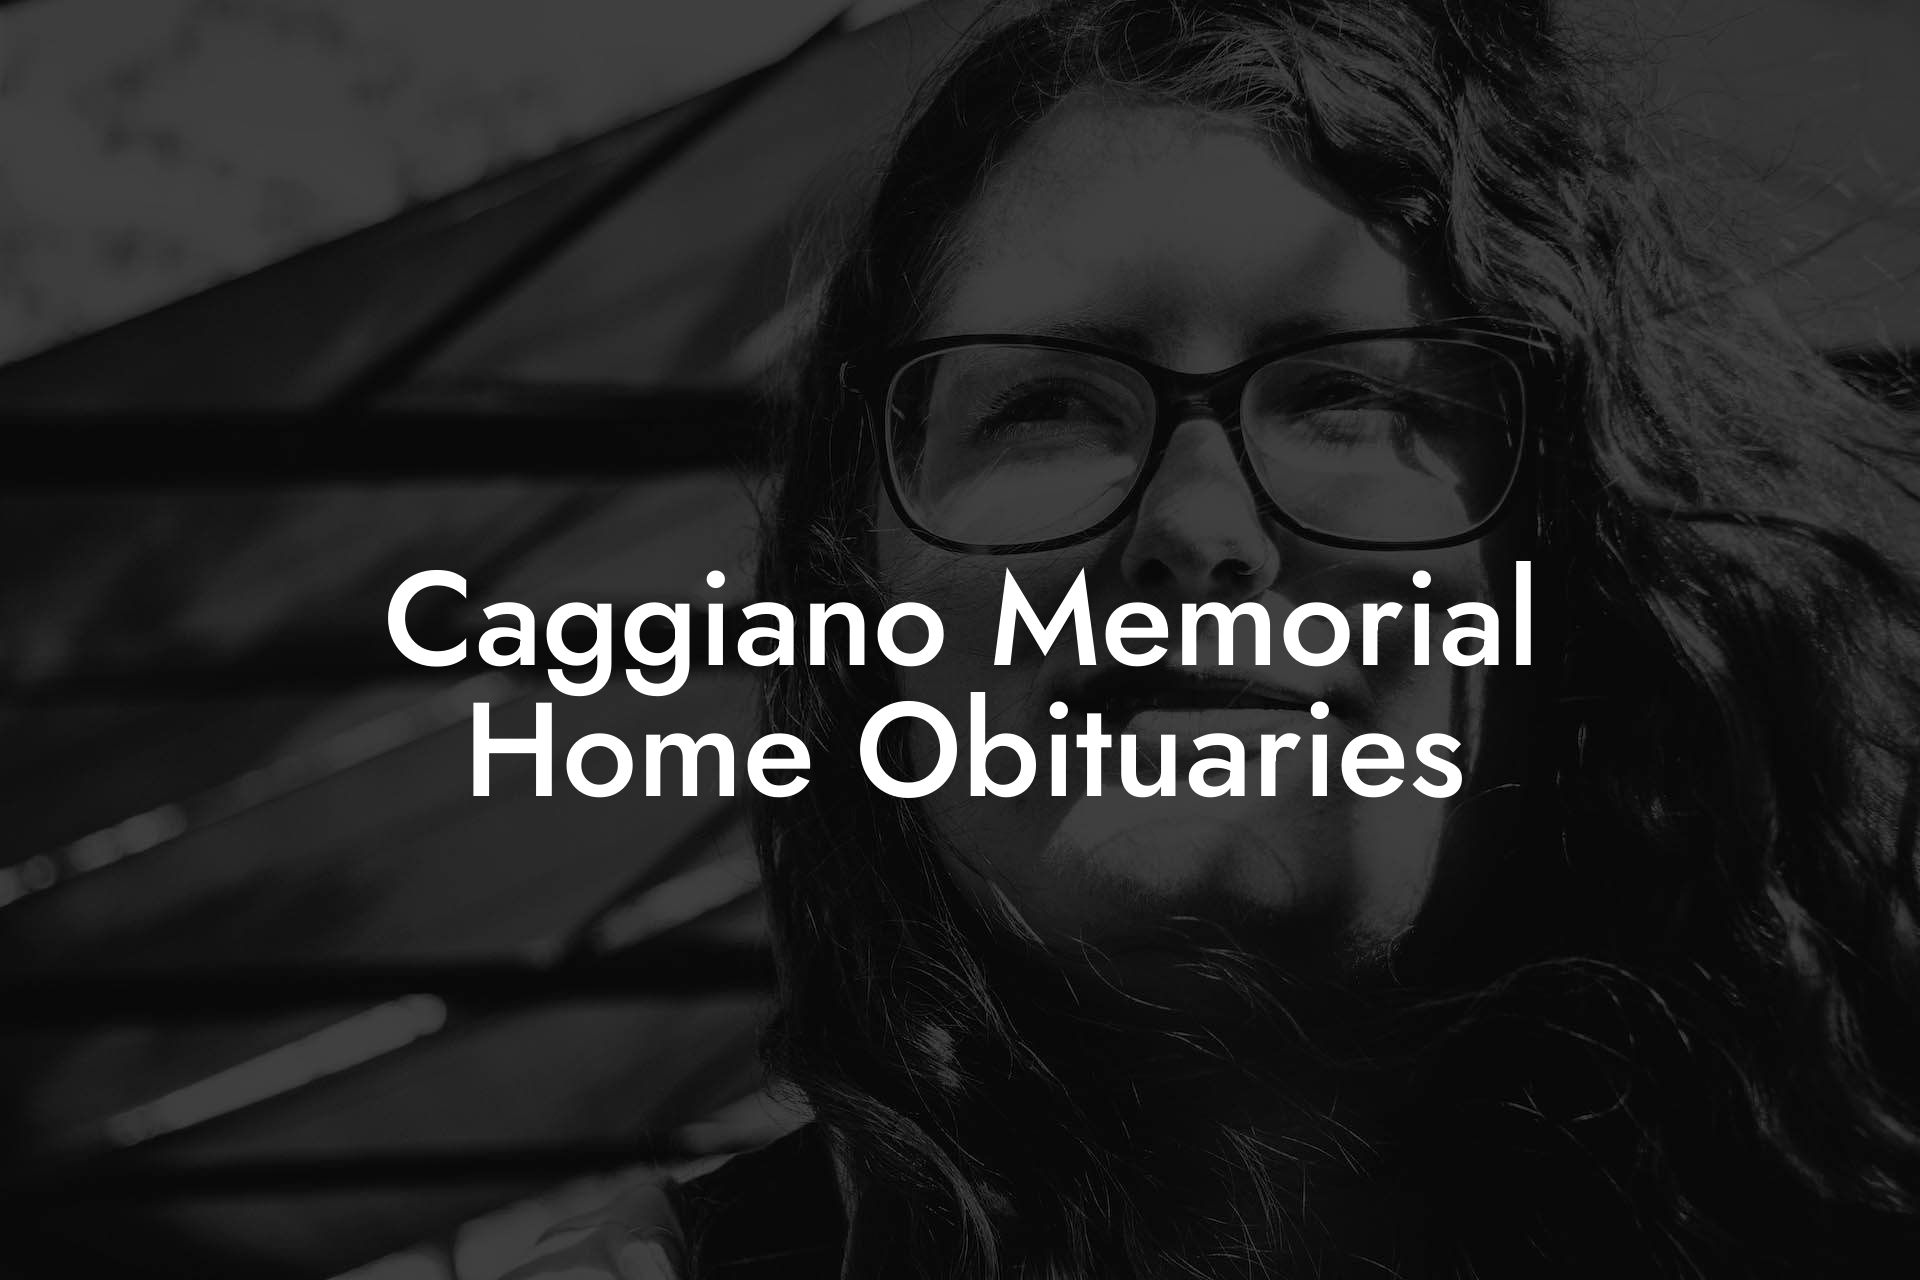 Caggiano Memorial Home Obituaries